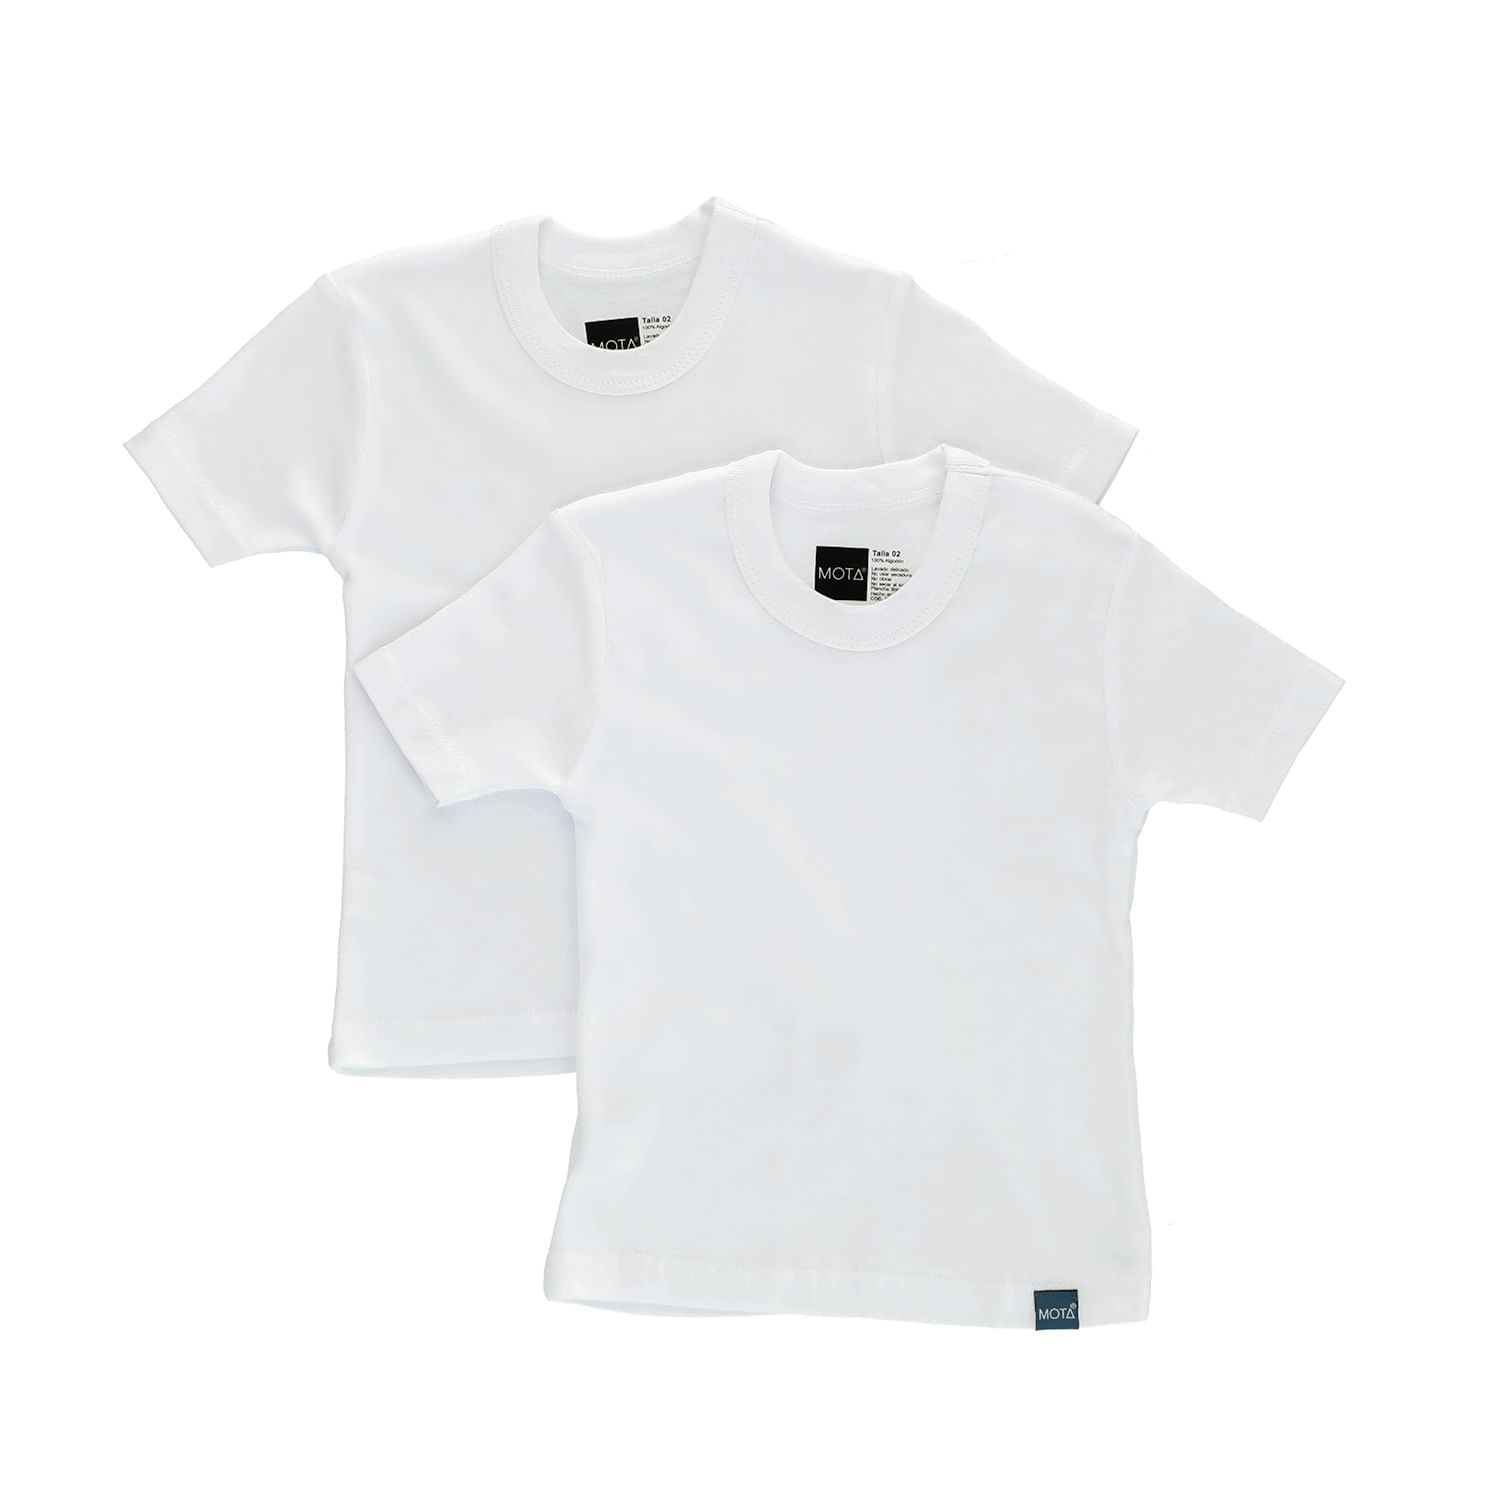 Tais - Camiseta Niña Manga Corta Algodón Infantil - MonarchChile